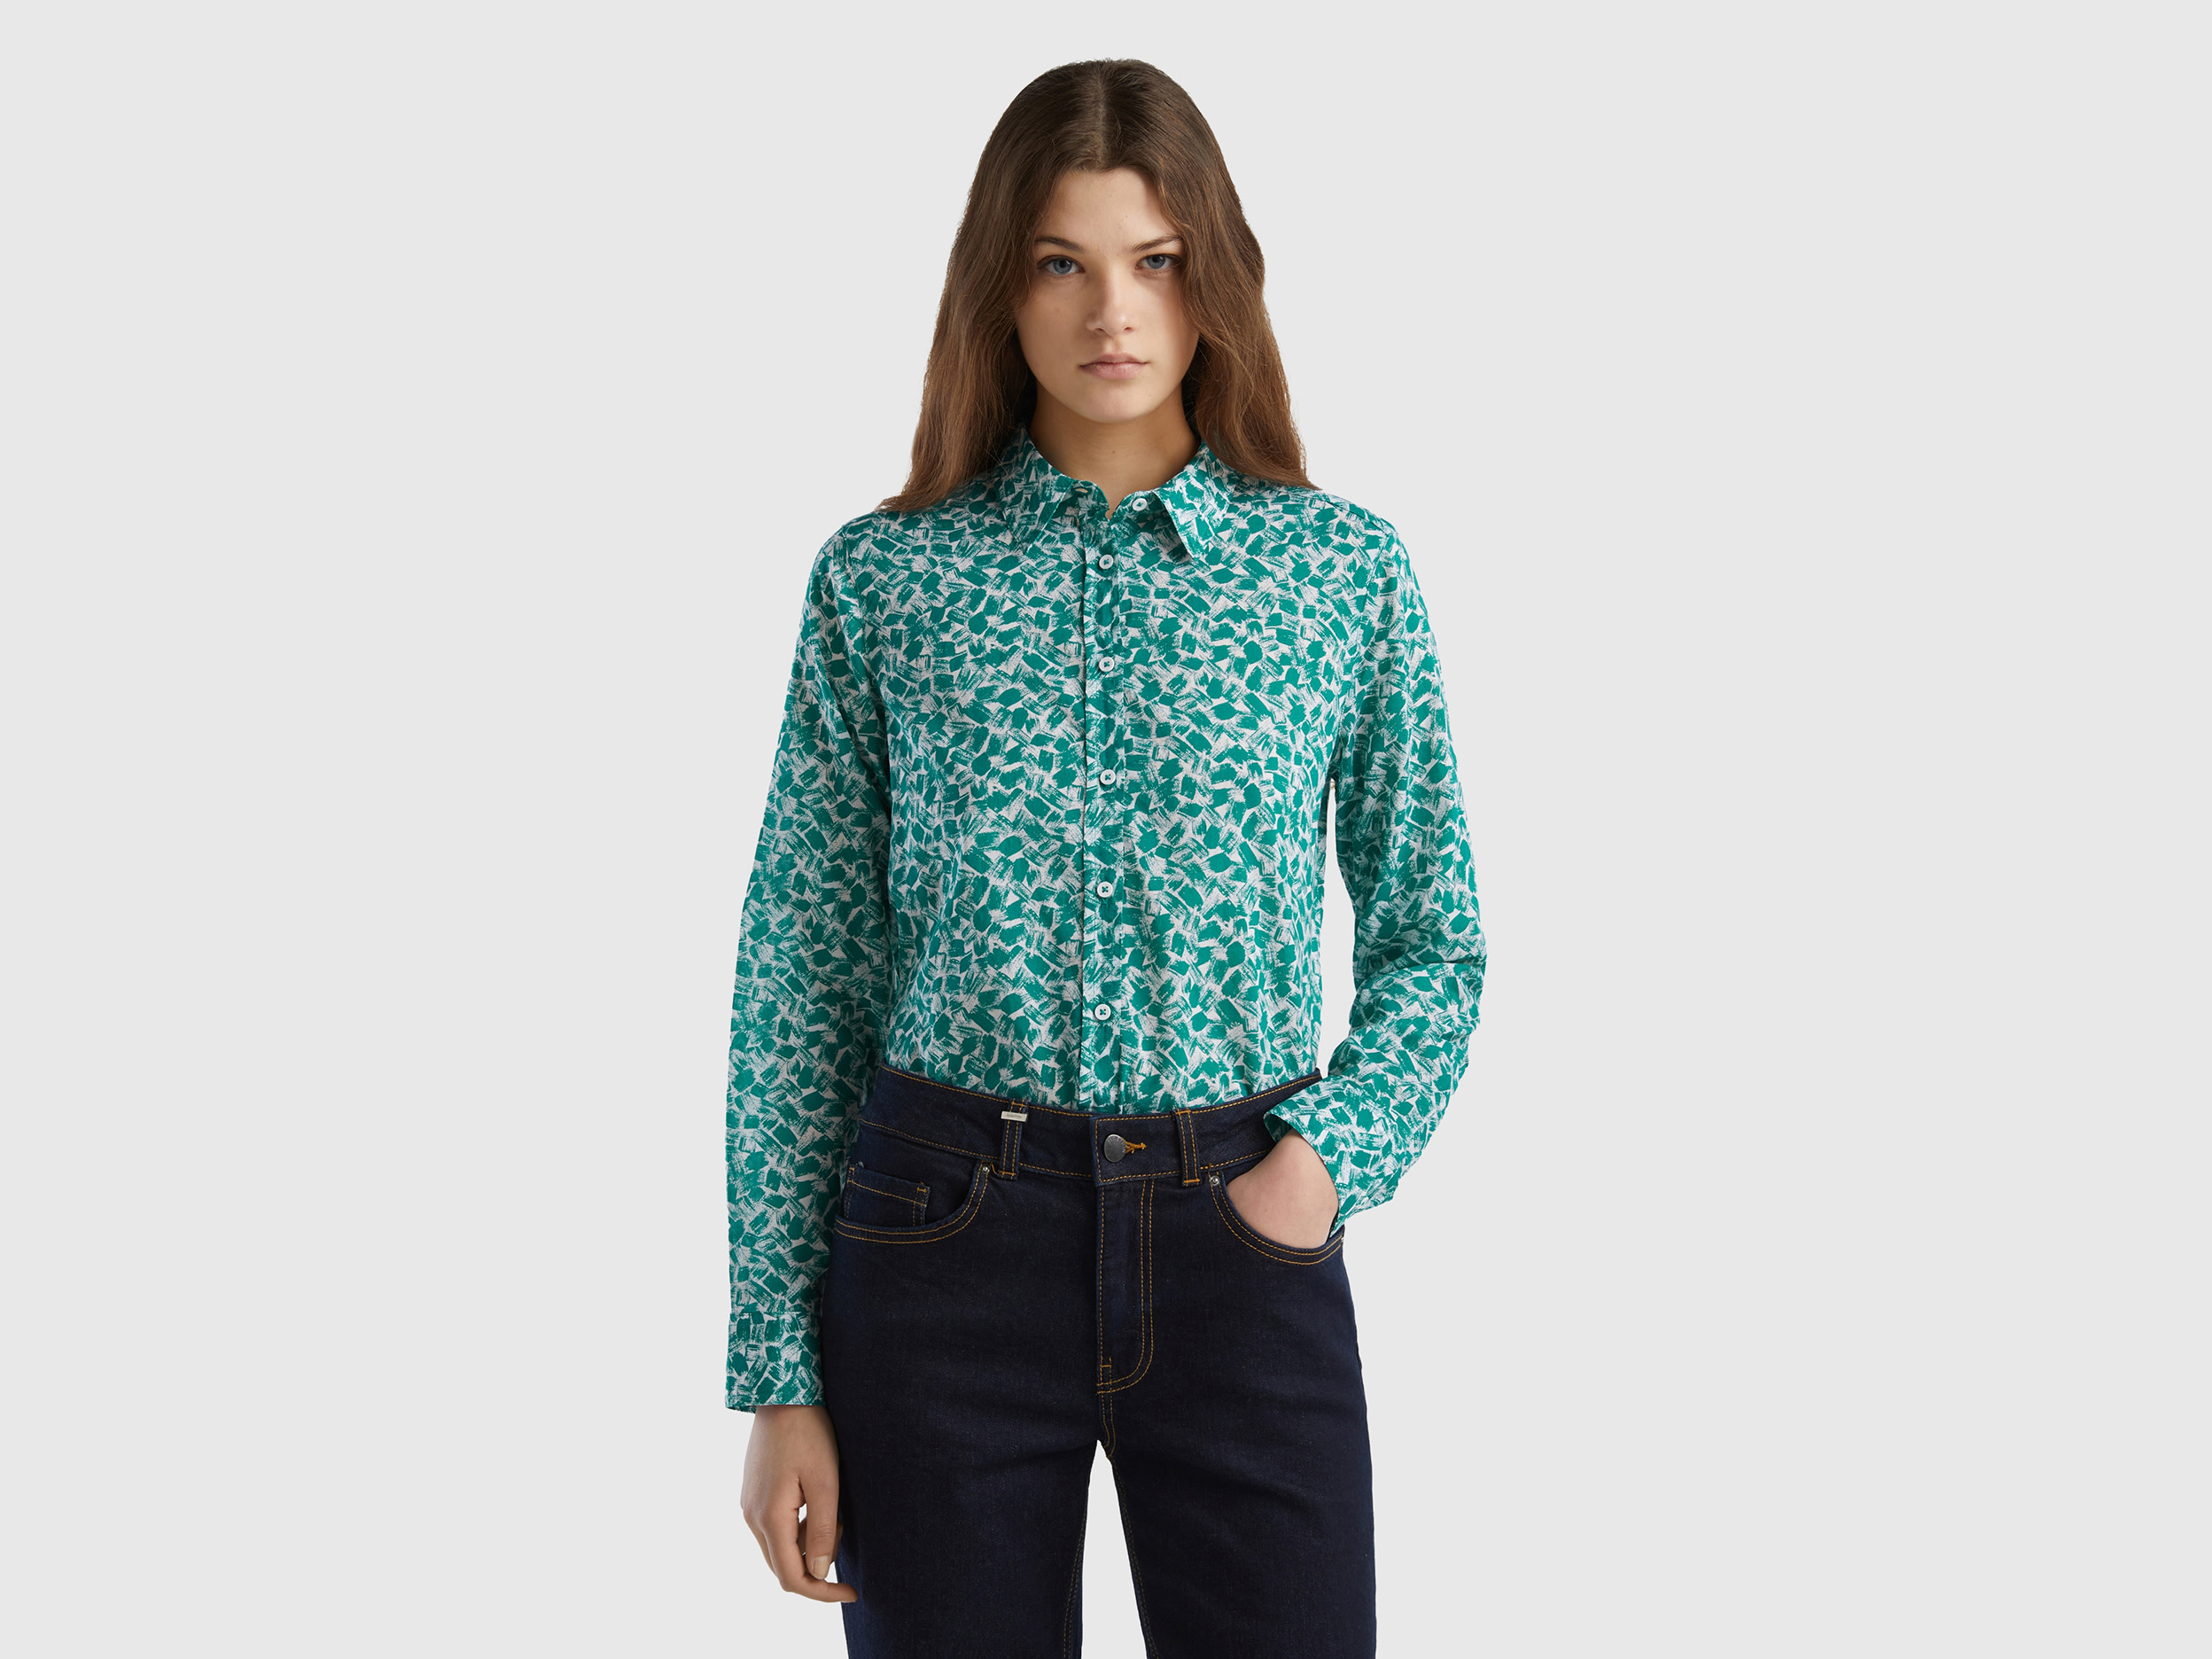 Benetton, 100% Cotton Patterned Shirt, size S, Teal, Women